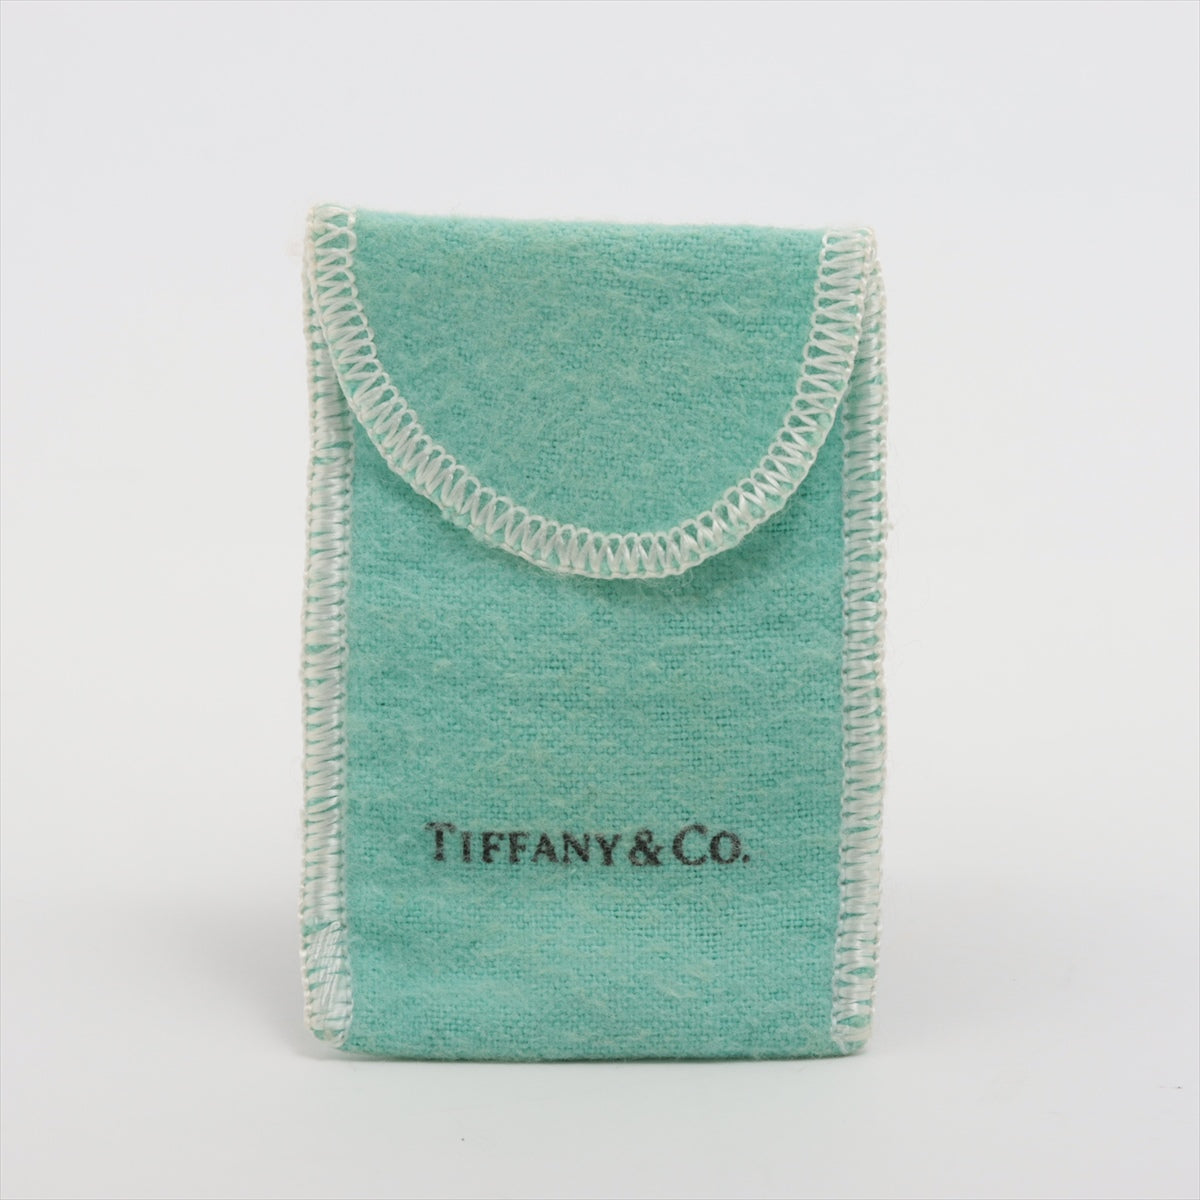 Tiffany Open Heart Lariate Necklace 925x Pearl 5.4g Silver